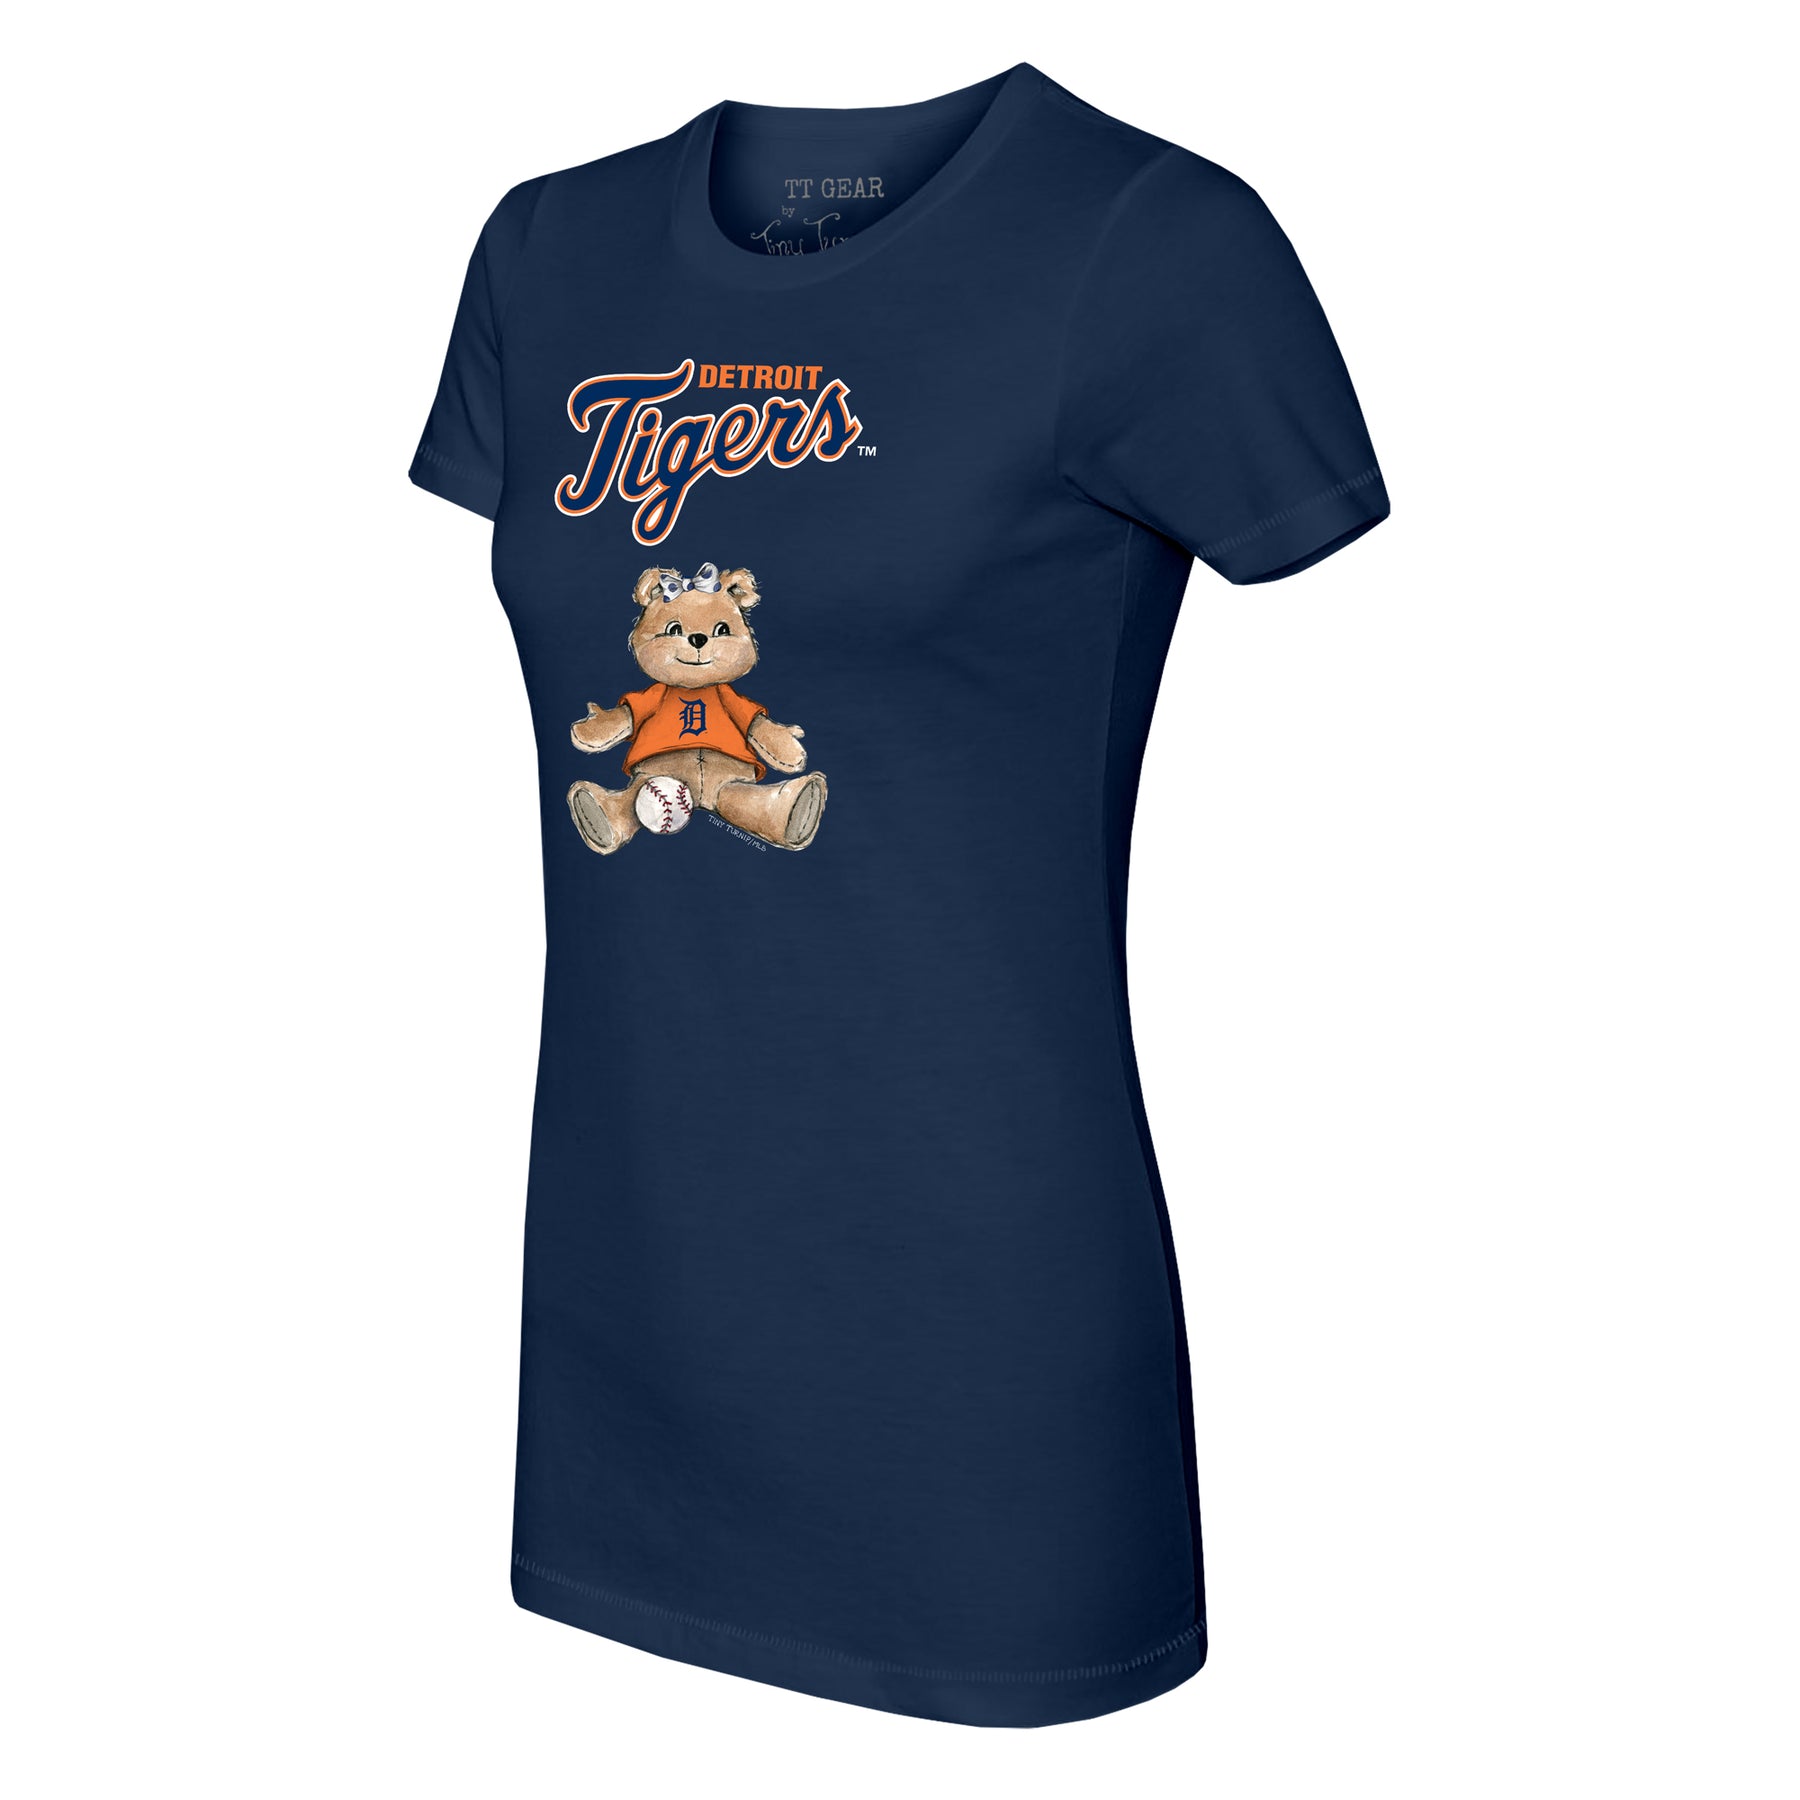 Detroit Tigers Girl Teddy Tee Shirt Women's Small / Navy Blue